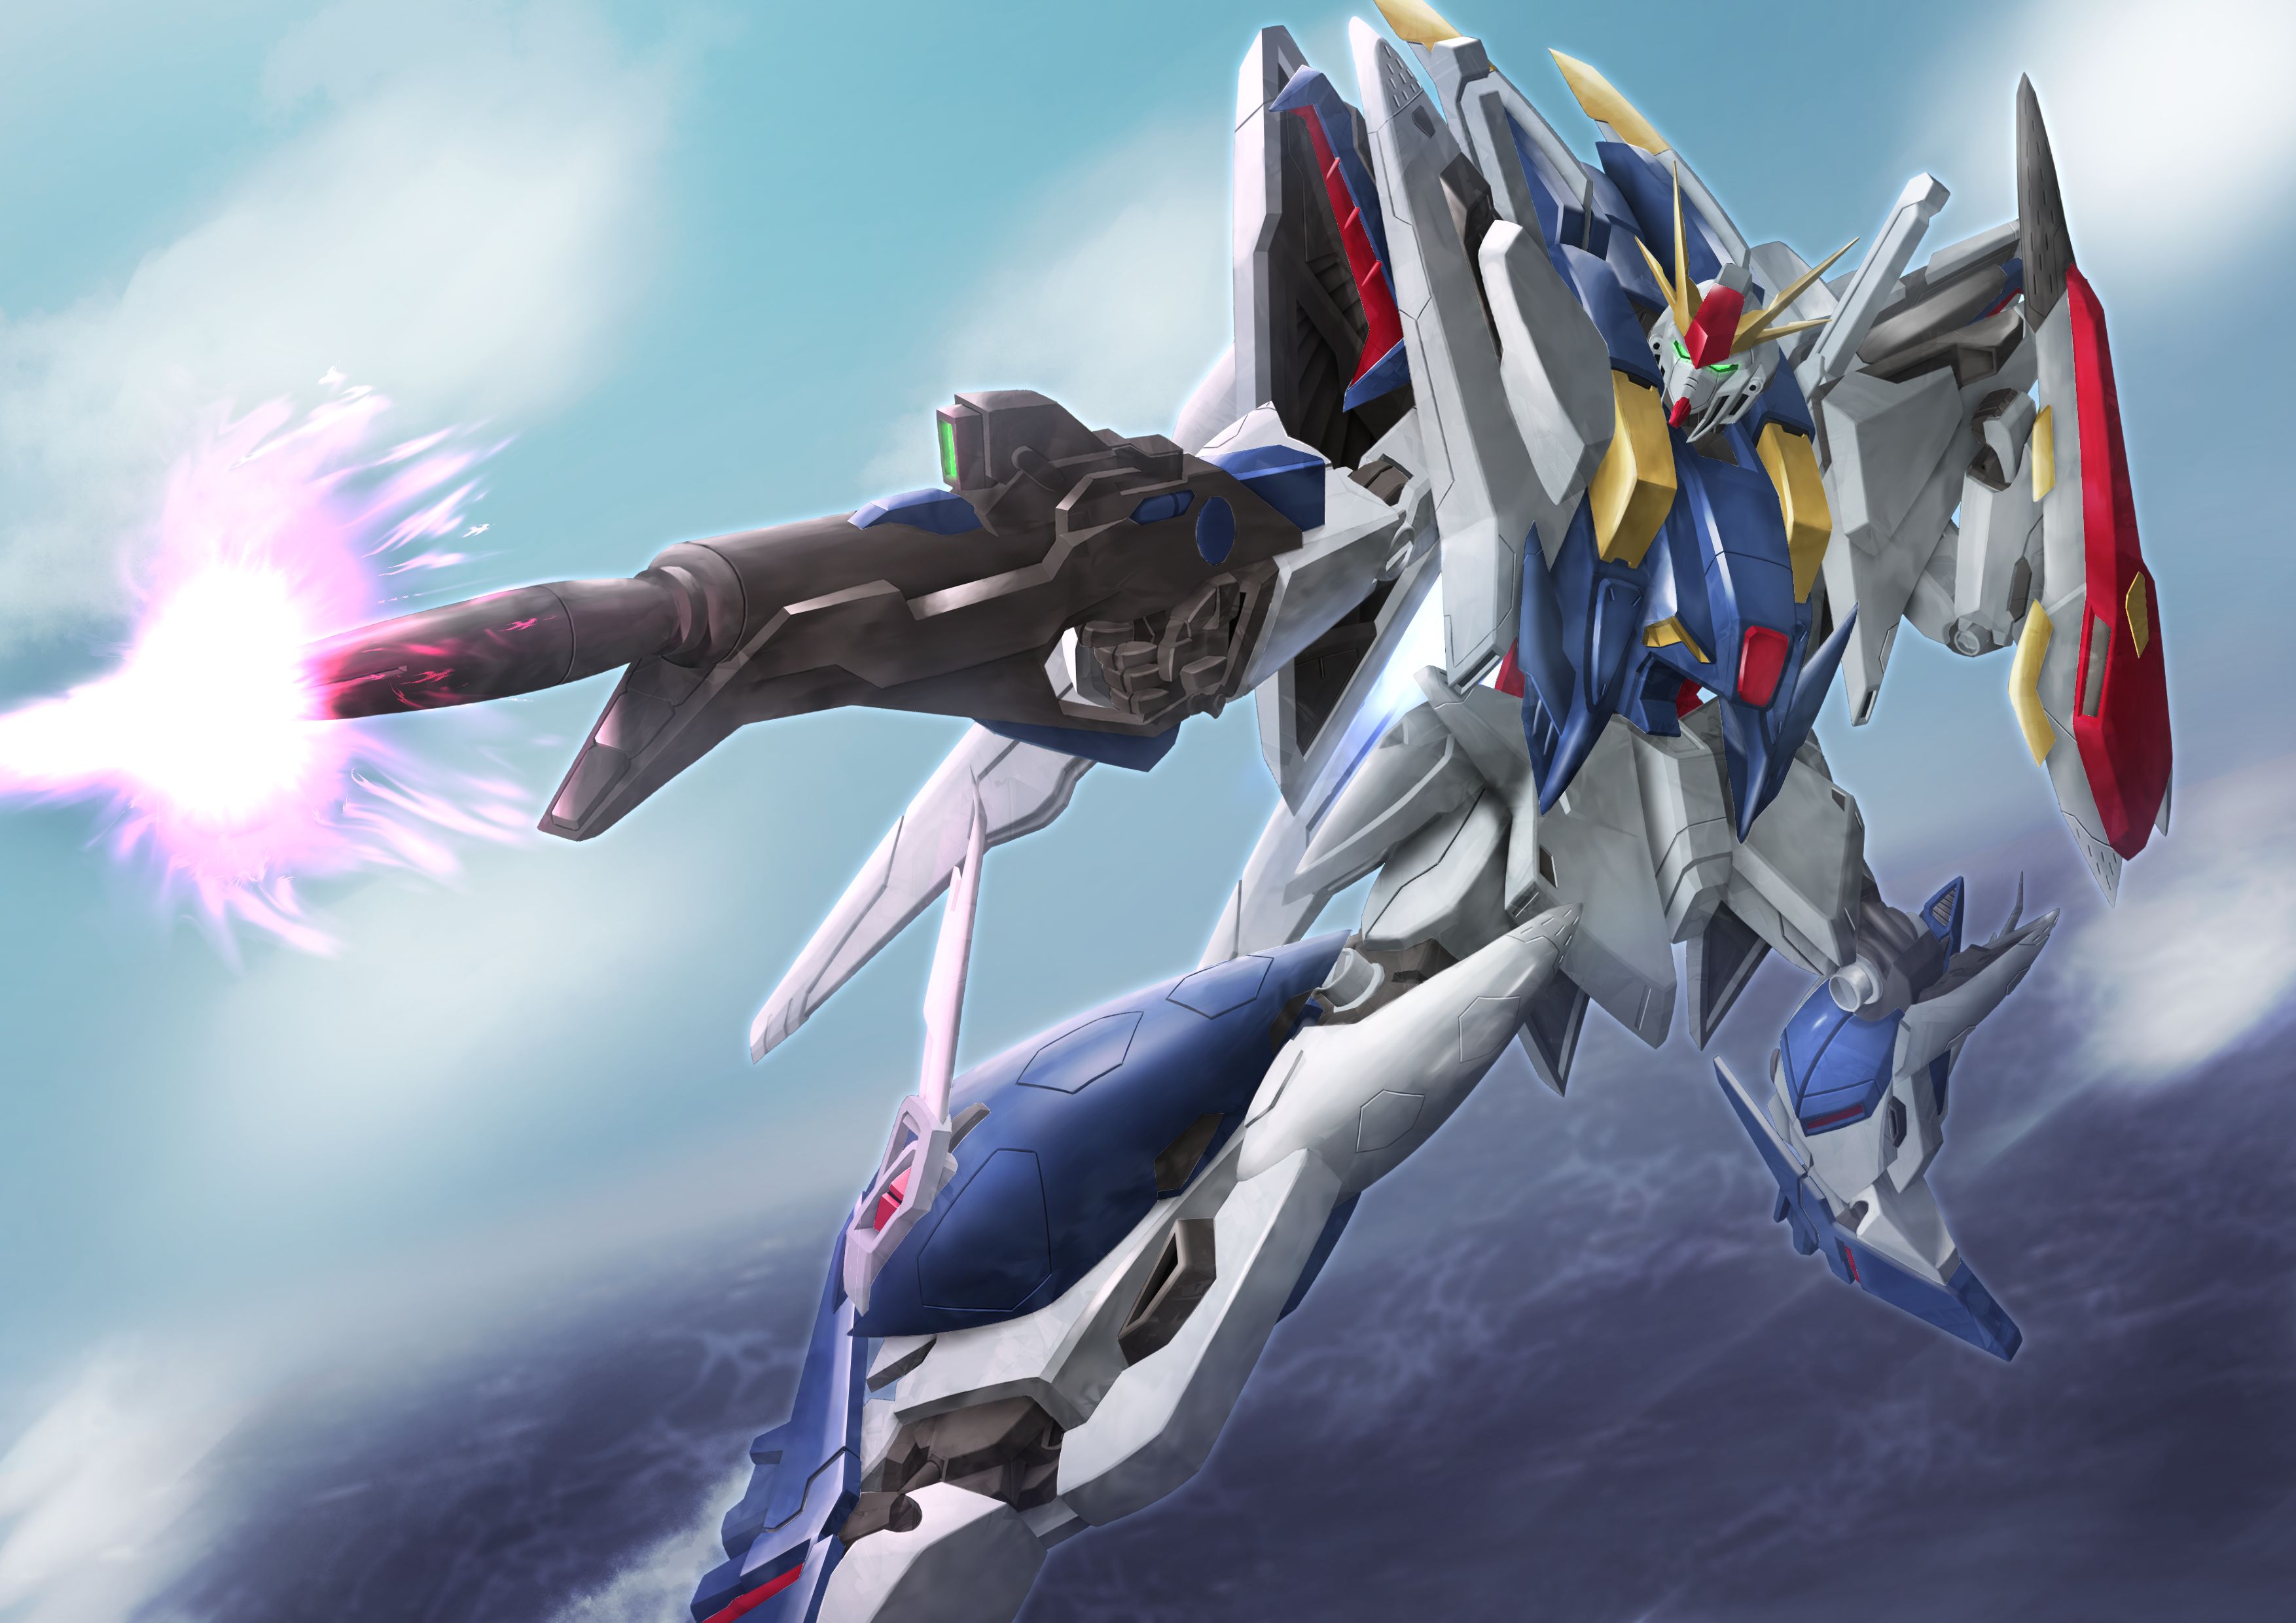 Xi Gundam. Gundam, Gundam art, Fighter jets